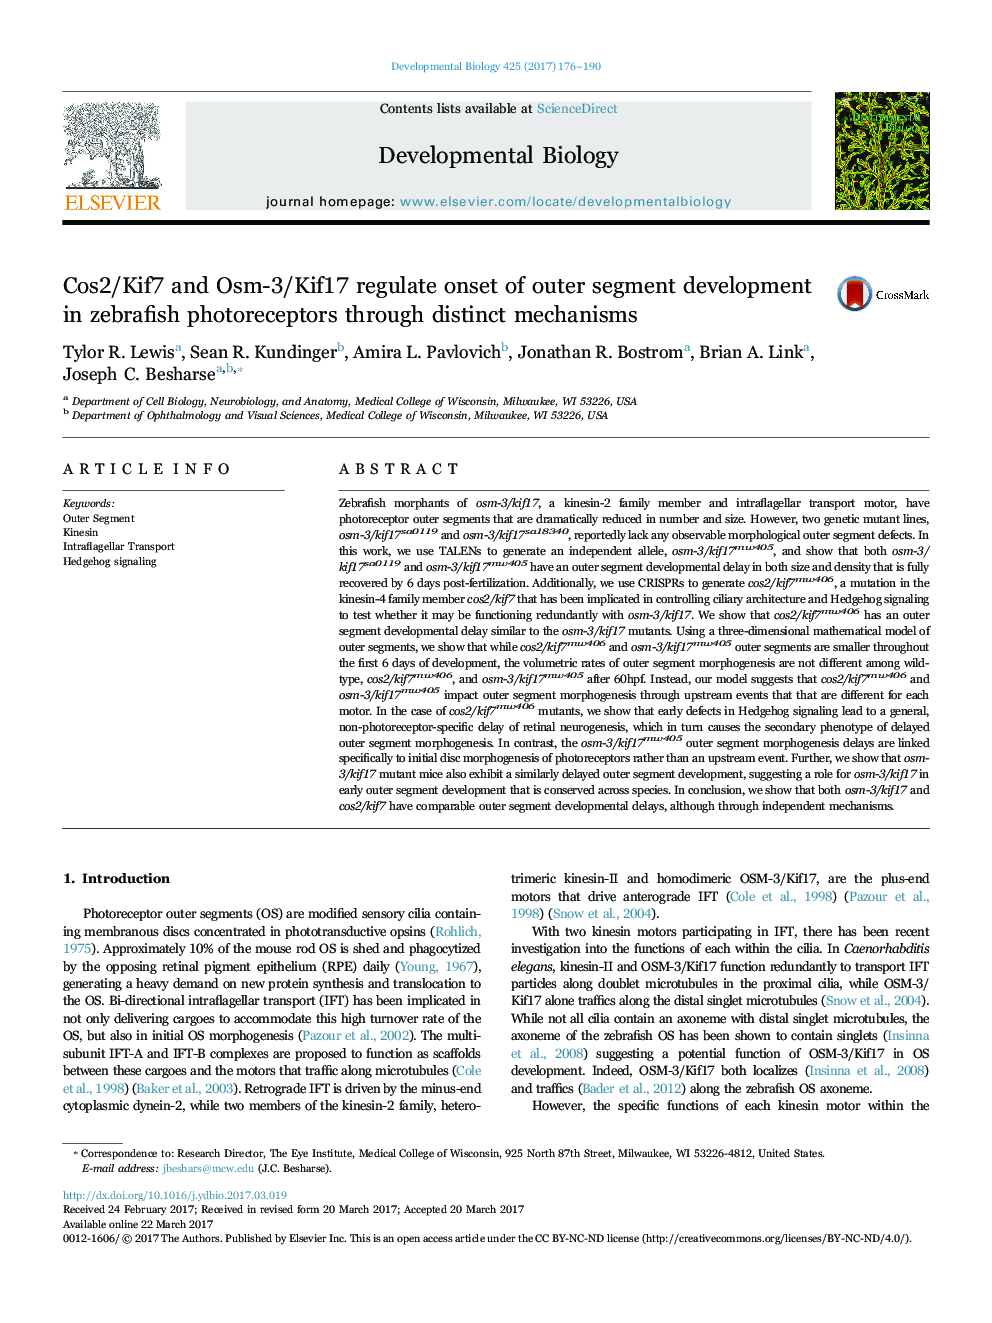 Cos2/Kif7 and Osm-3/Kif17 regulate onset of outer segment development in zebrafish photoreceptors through distinct mechanisms